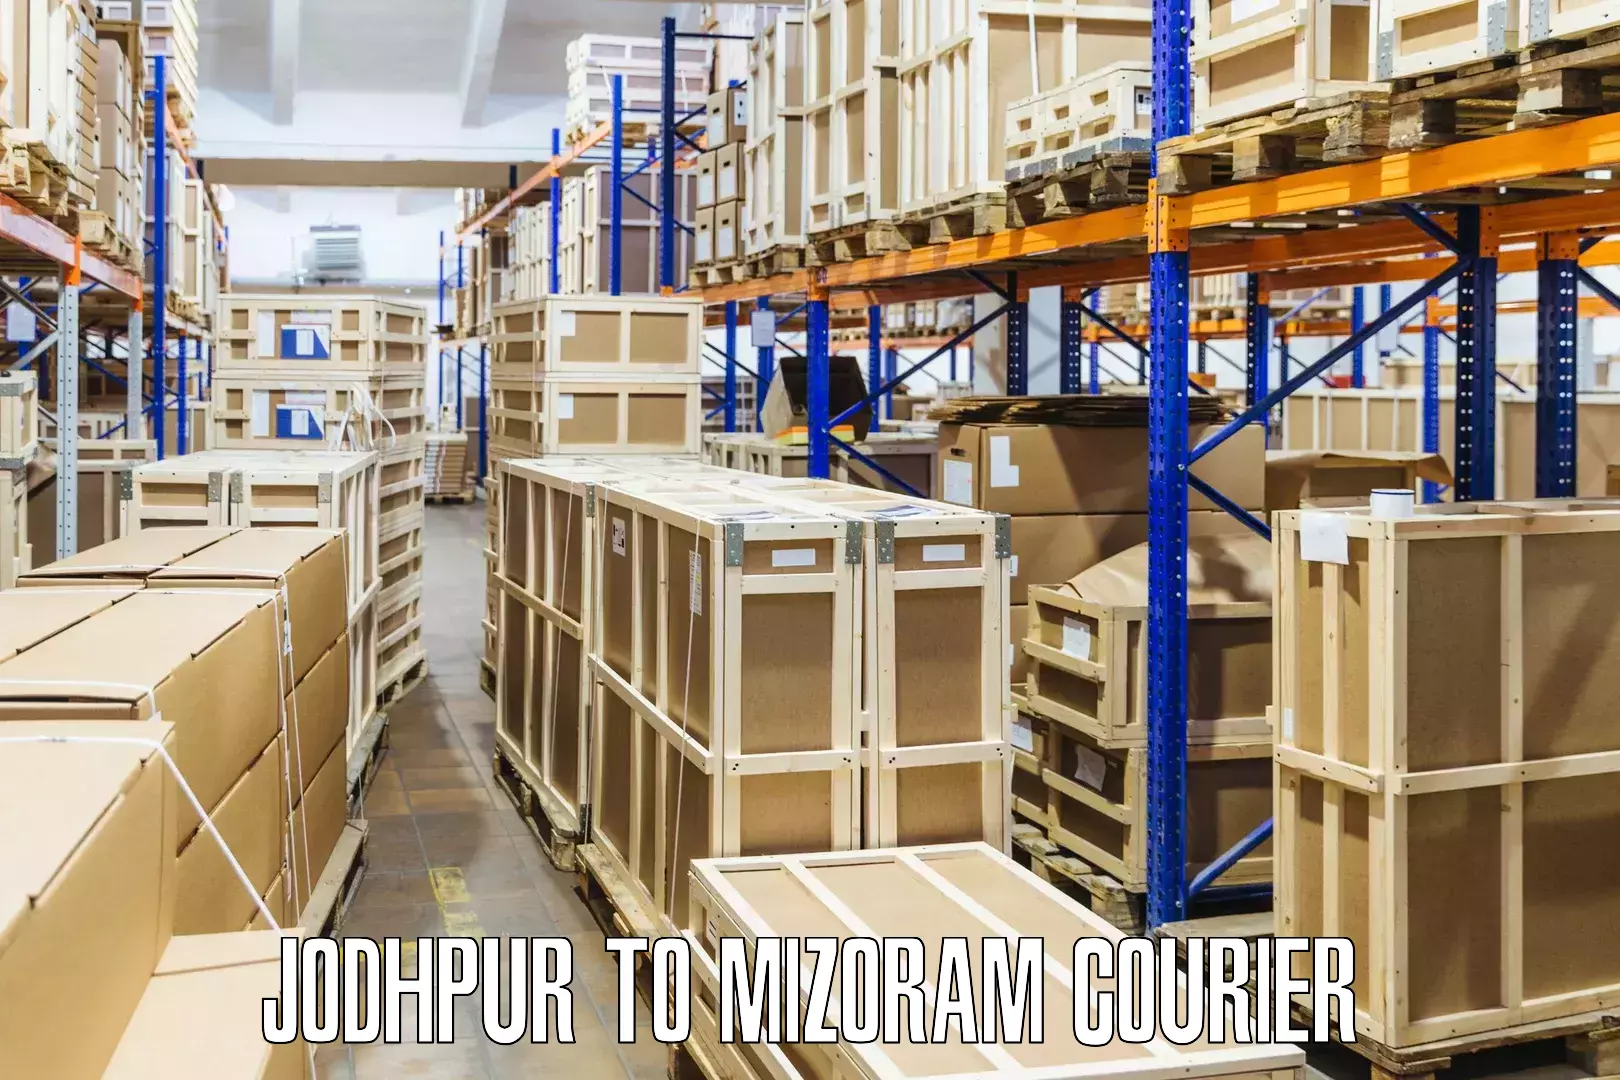 Courier service efficiency Jodhpur to Serchhip